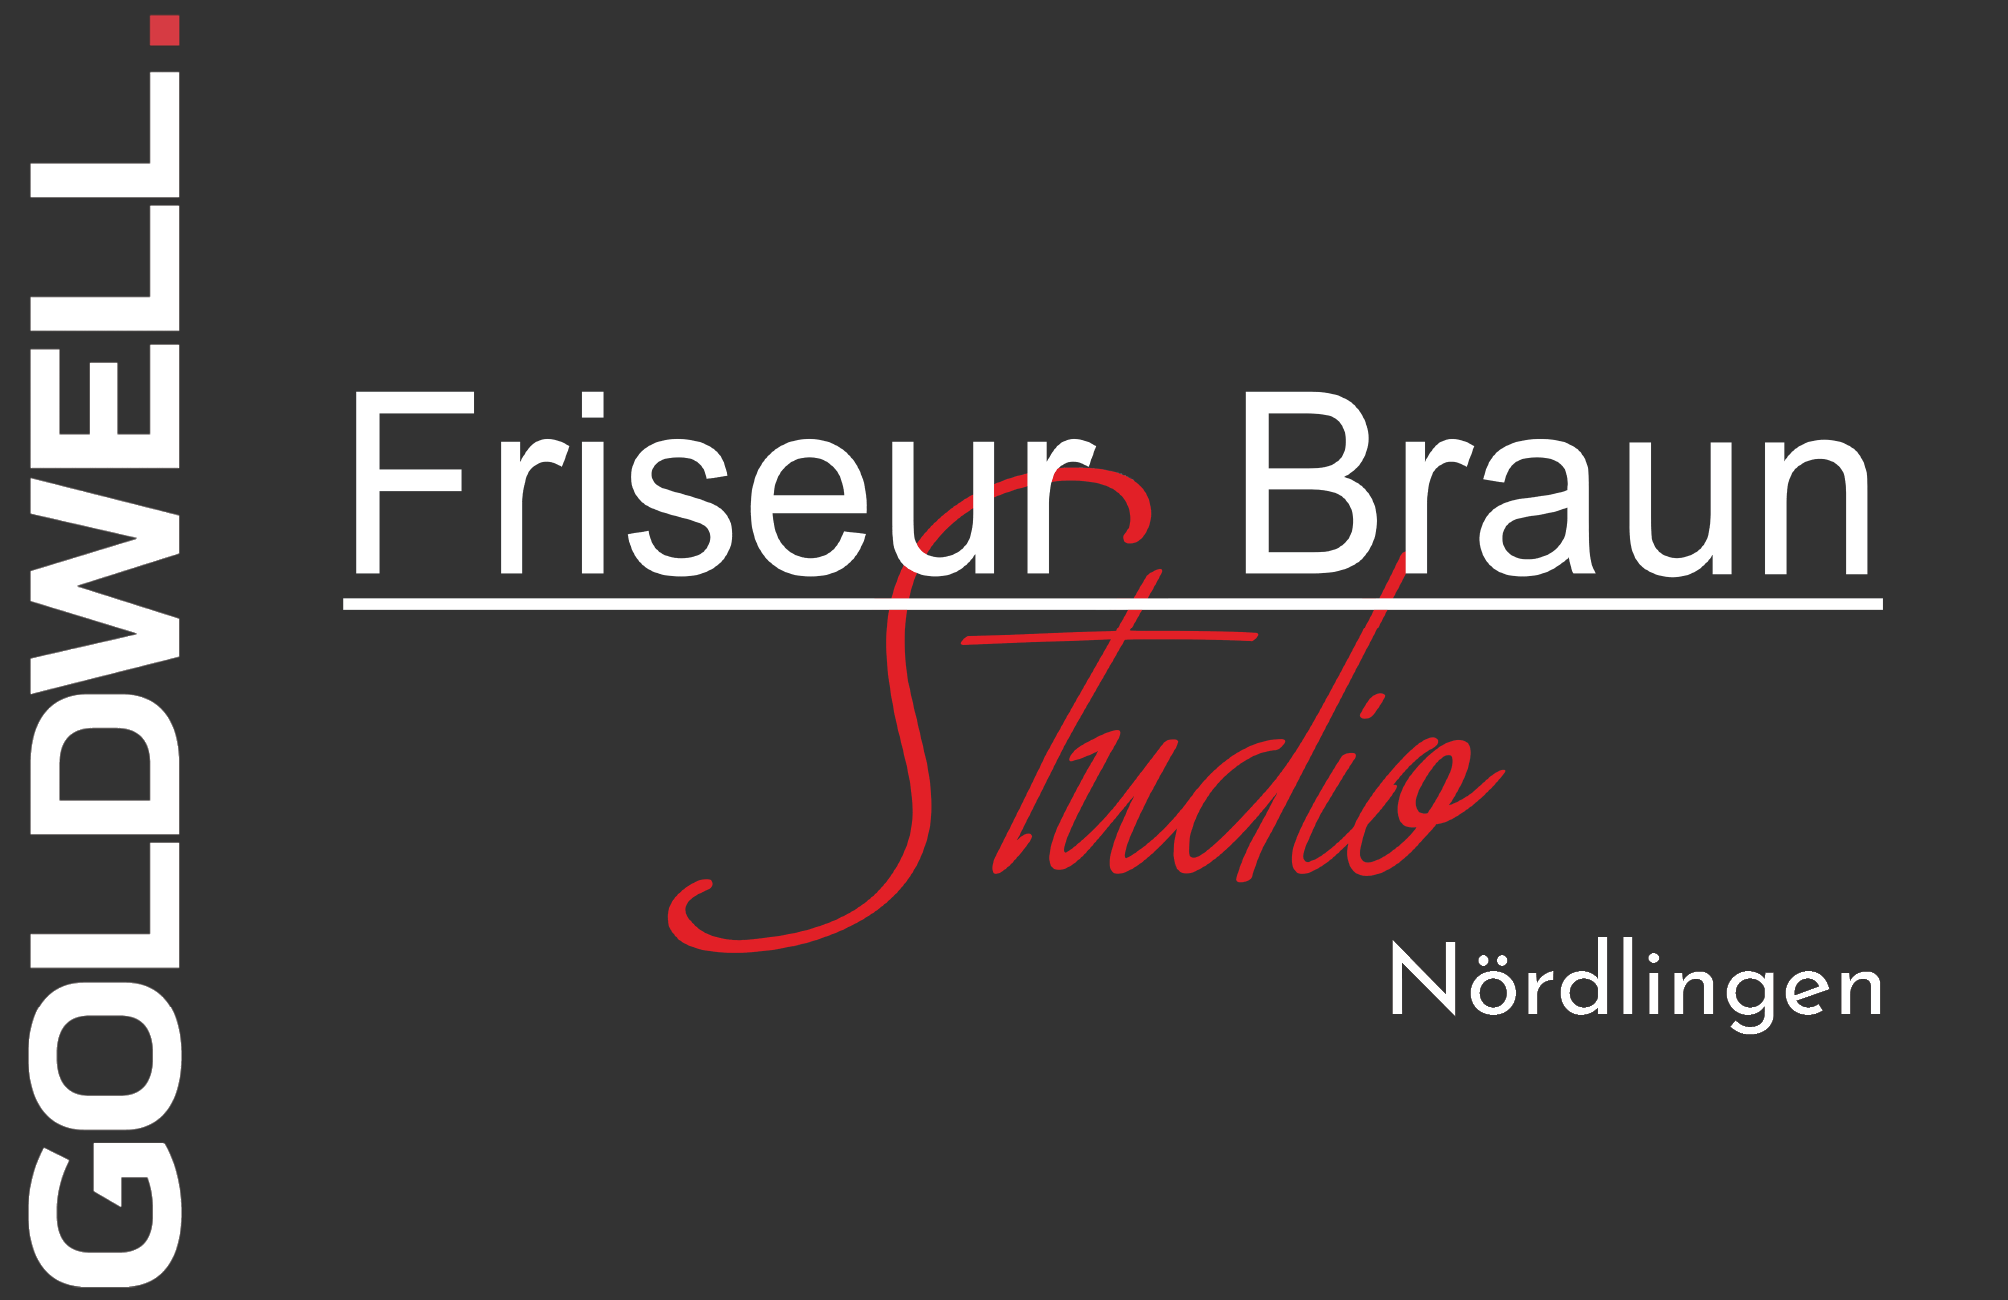 friseur-studio-braun